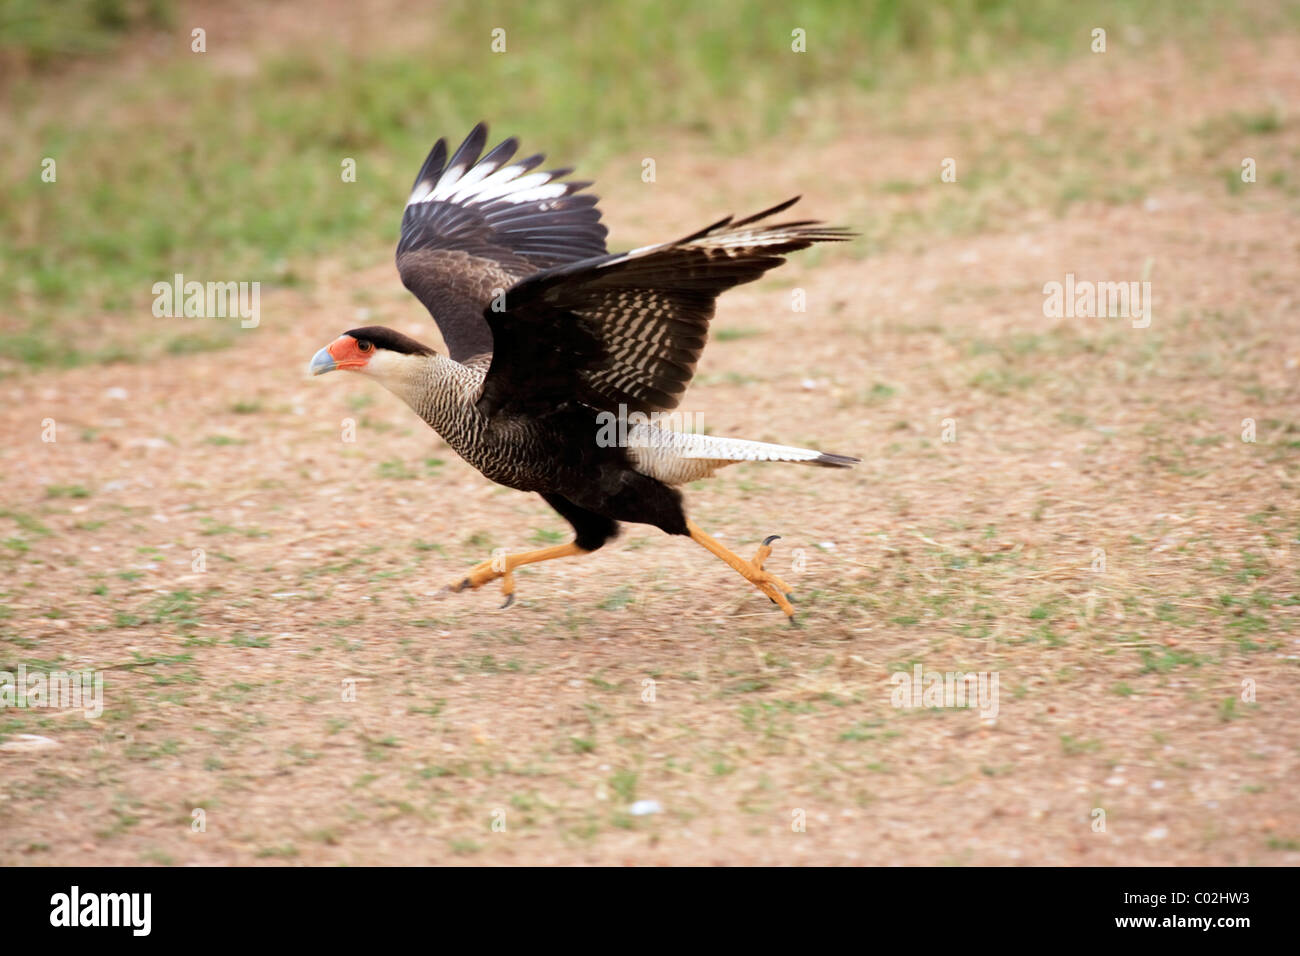 Southern Crested Caracara (Caracara plancus, formerly Polyborus plancus), adult running along the ground, , Brazil Stock Photo